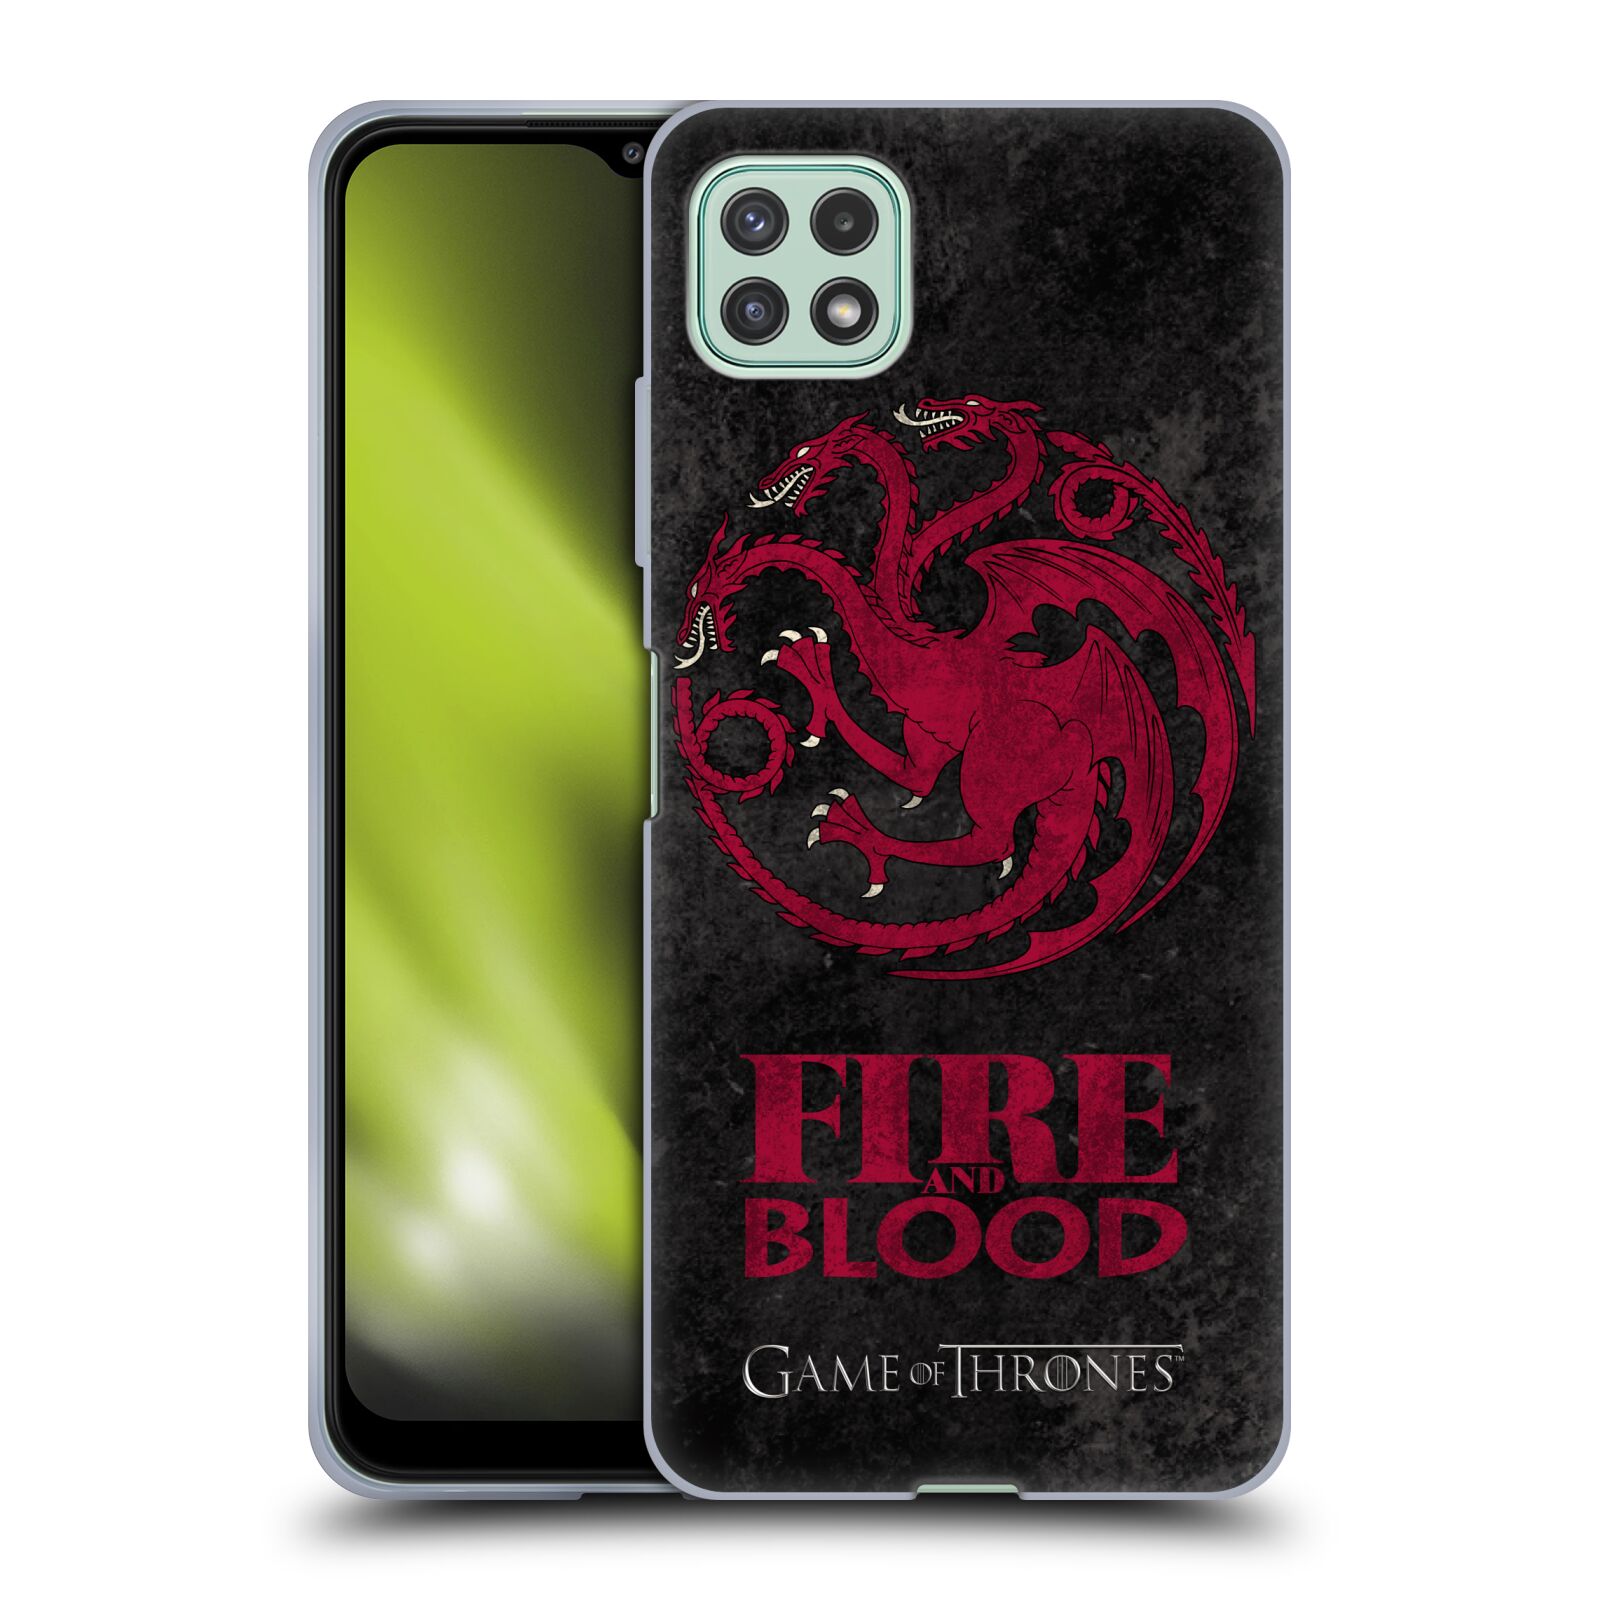 Silikonové pouzdro na mobil Samsung Galaxy A22 5G - Head Case - Hra o trůny - Sigils Targaryen - Fire and Blood (Silikonový kryt, obal, pouzdro na mobilní telefon Samsung Galaxy A22 5G s motivem Hra o trůny - Sigils Targaryen - Fire and Blood)